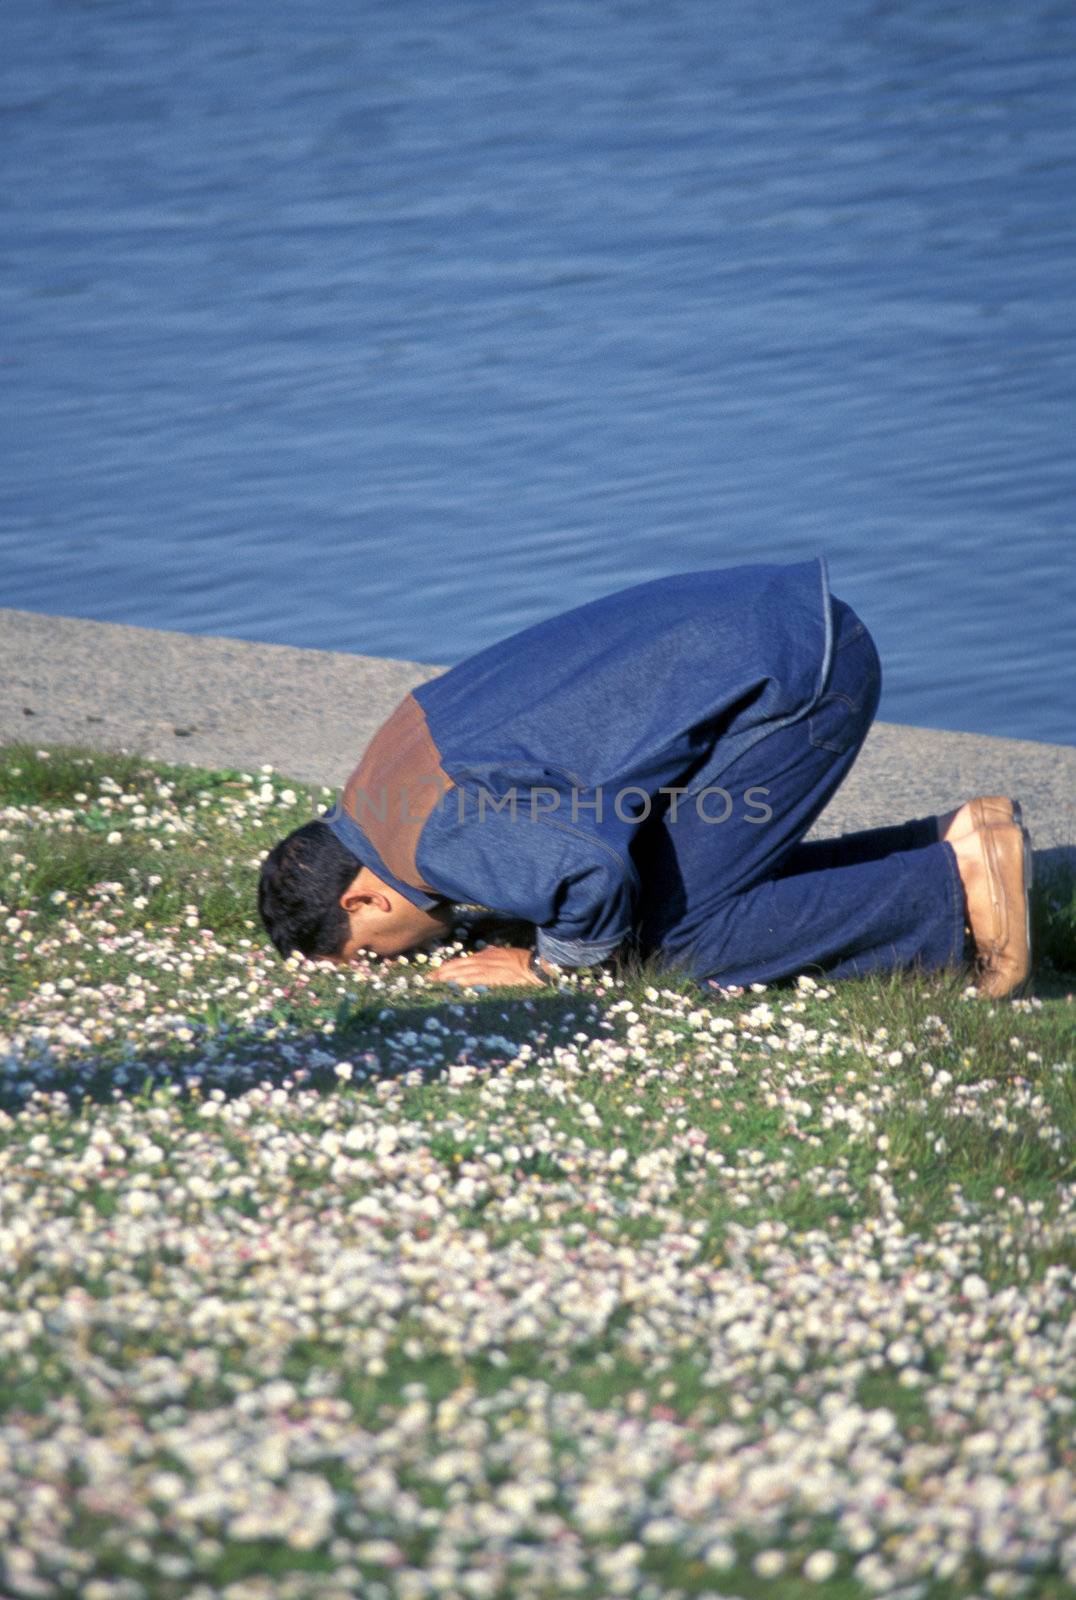 Muslim man praying on the ground.